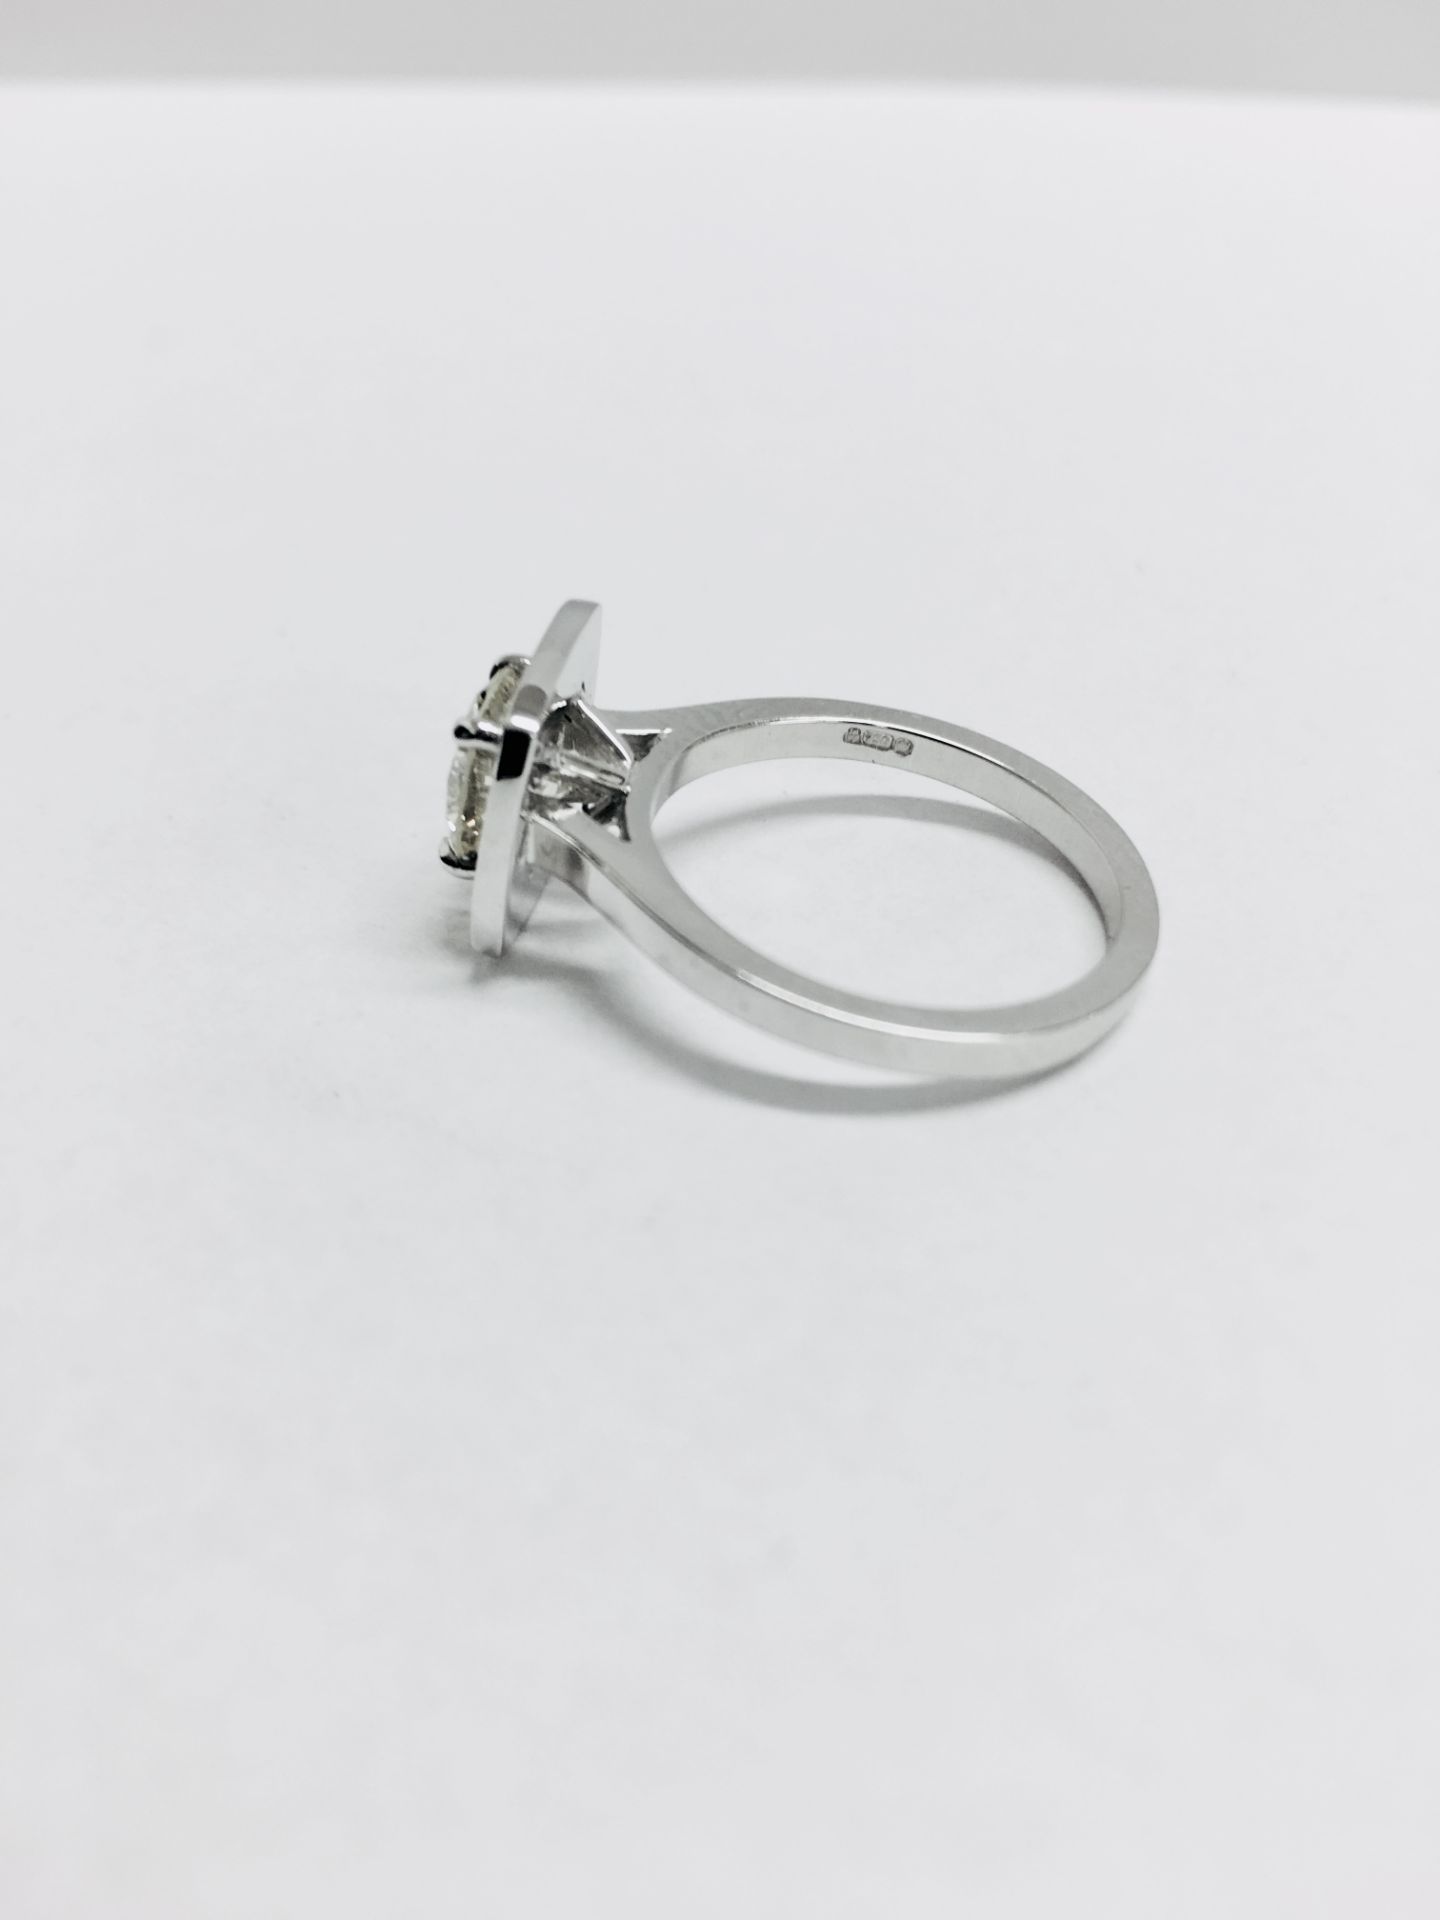 18ct white gold Handmade Halo style ring,0.50ct vs grade h colour diamond(clarity enhanced) - Image 3 of 5